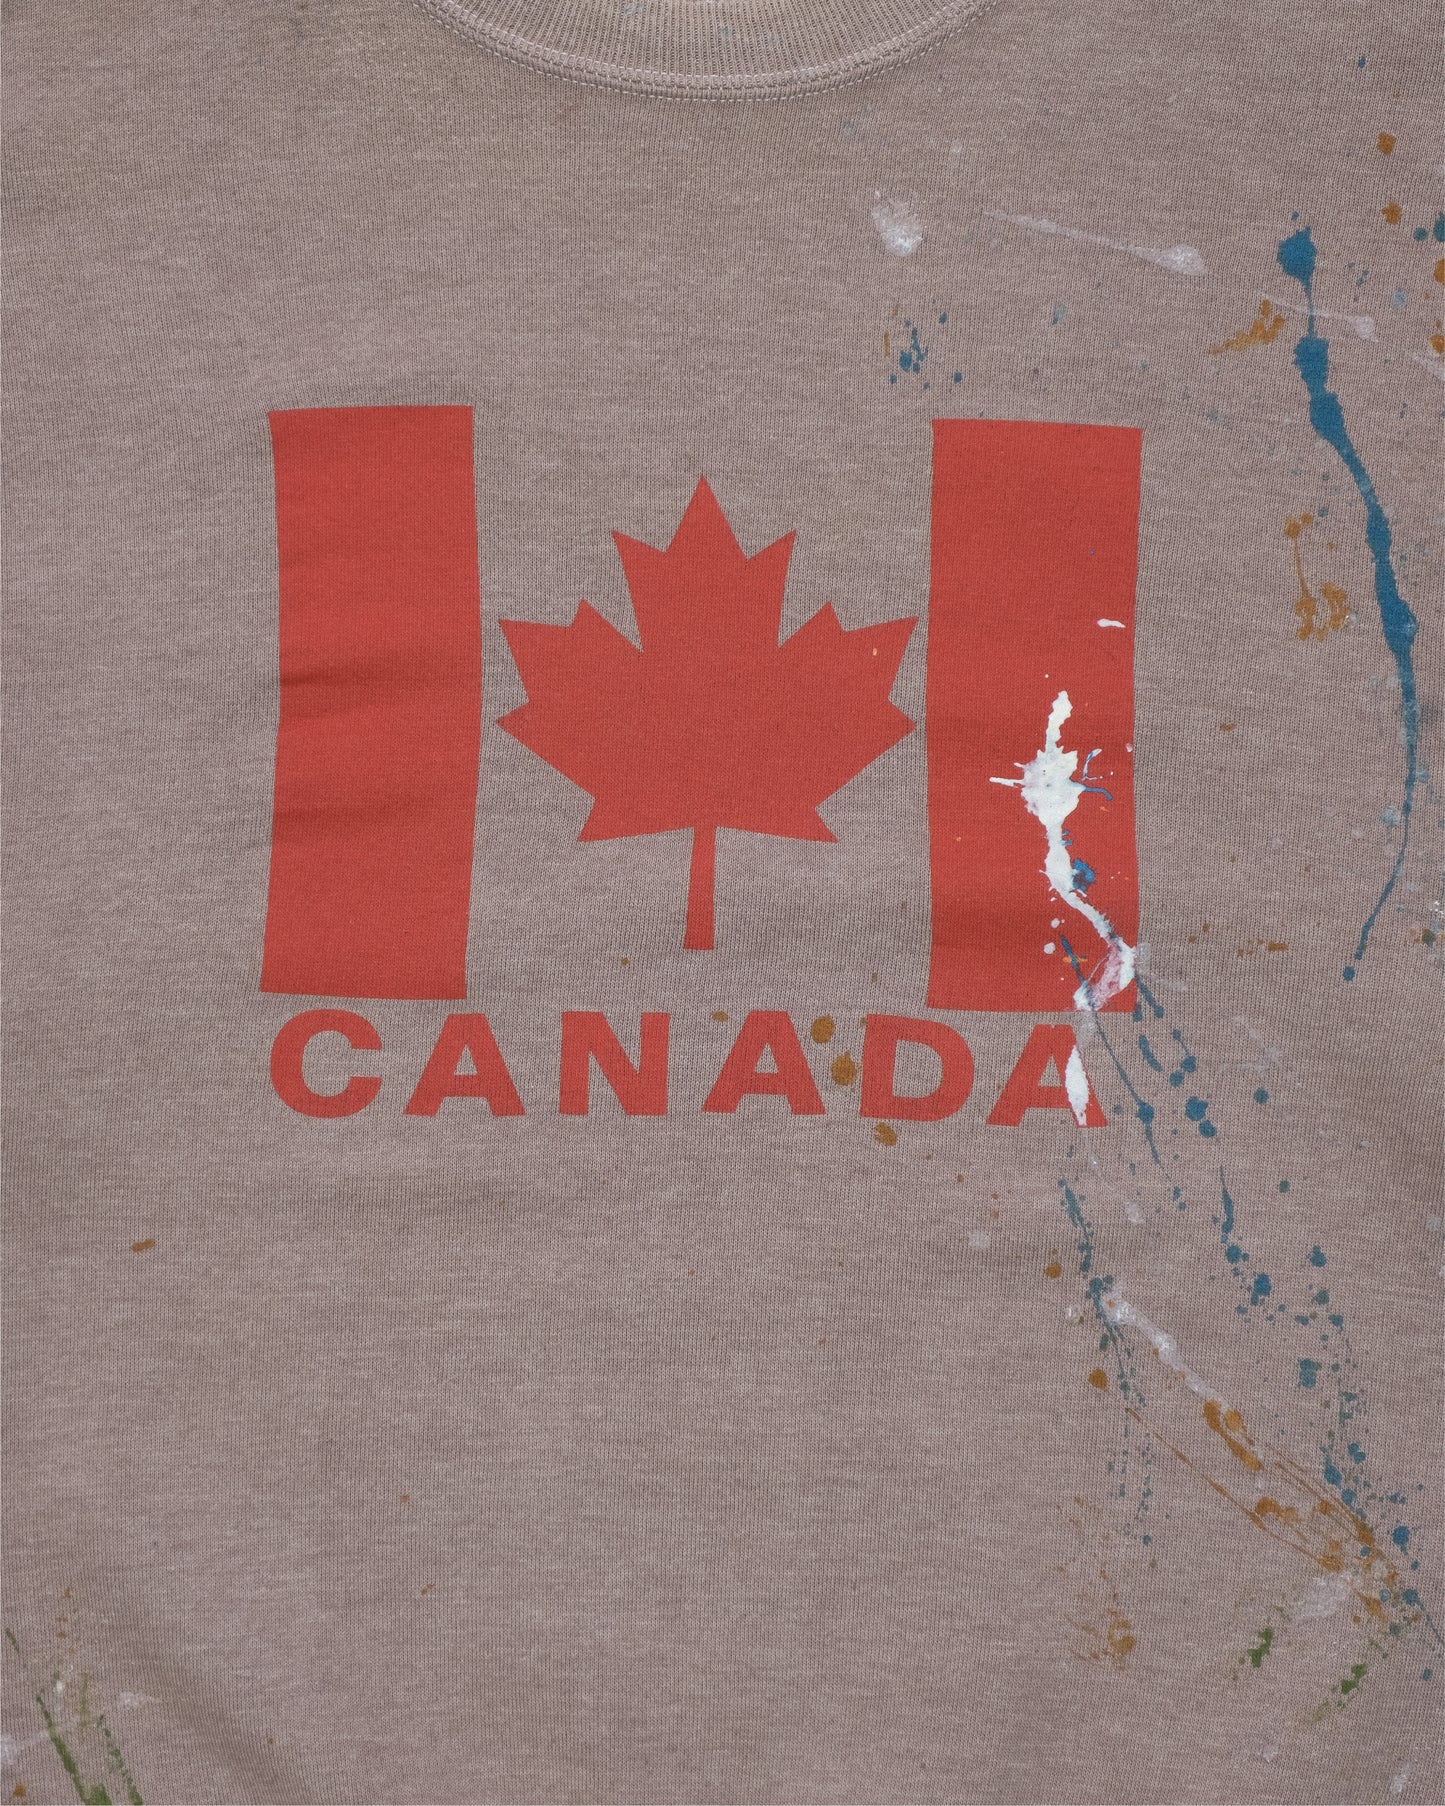 1990s Made in USA Canada Sweatshirt